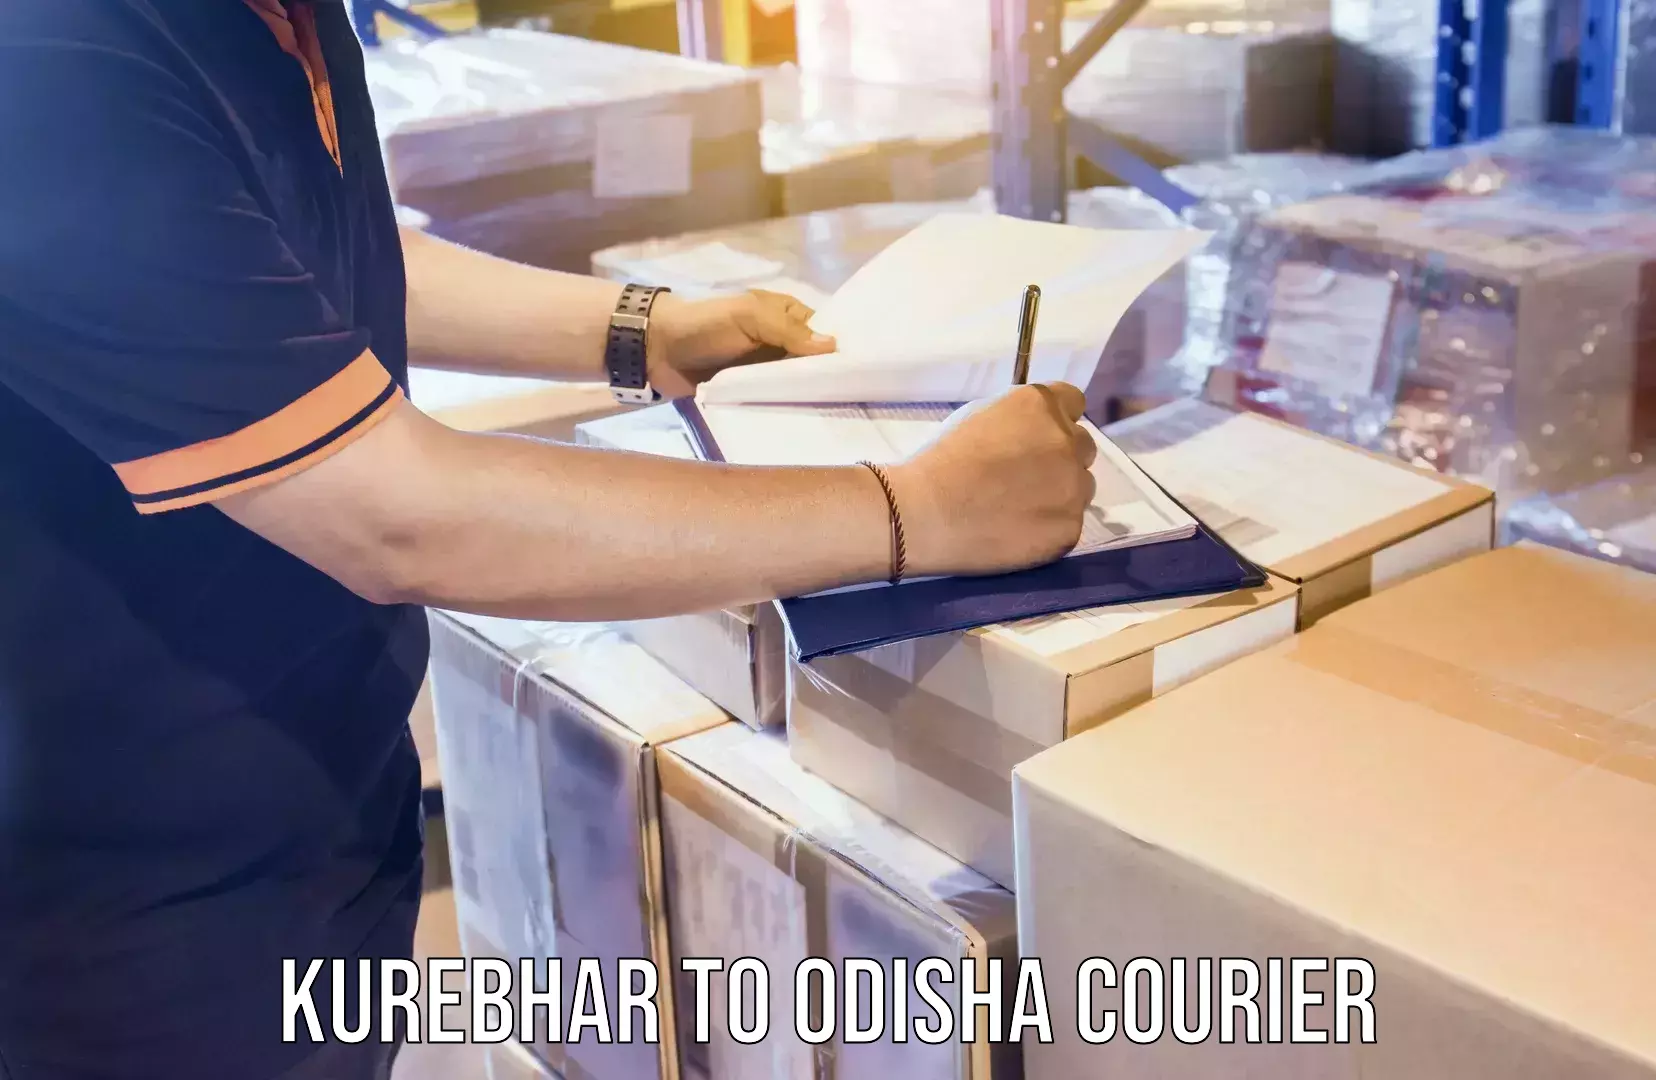 Moving and packing experts Kurebhar to Odisha